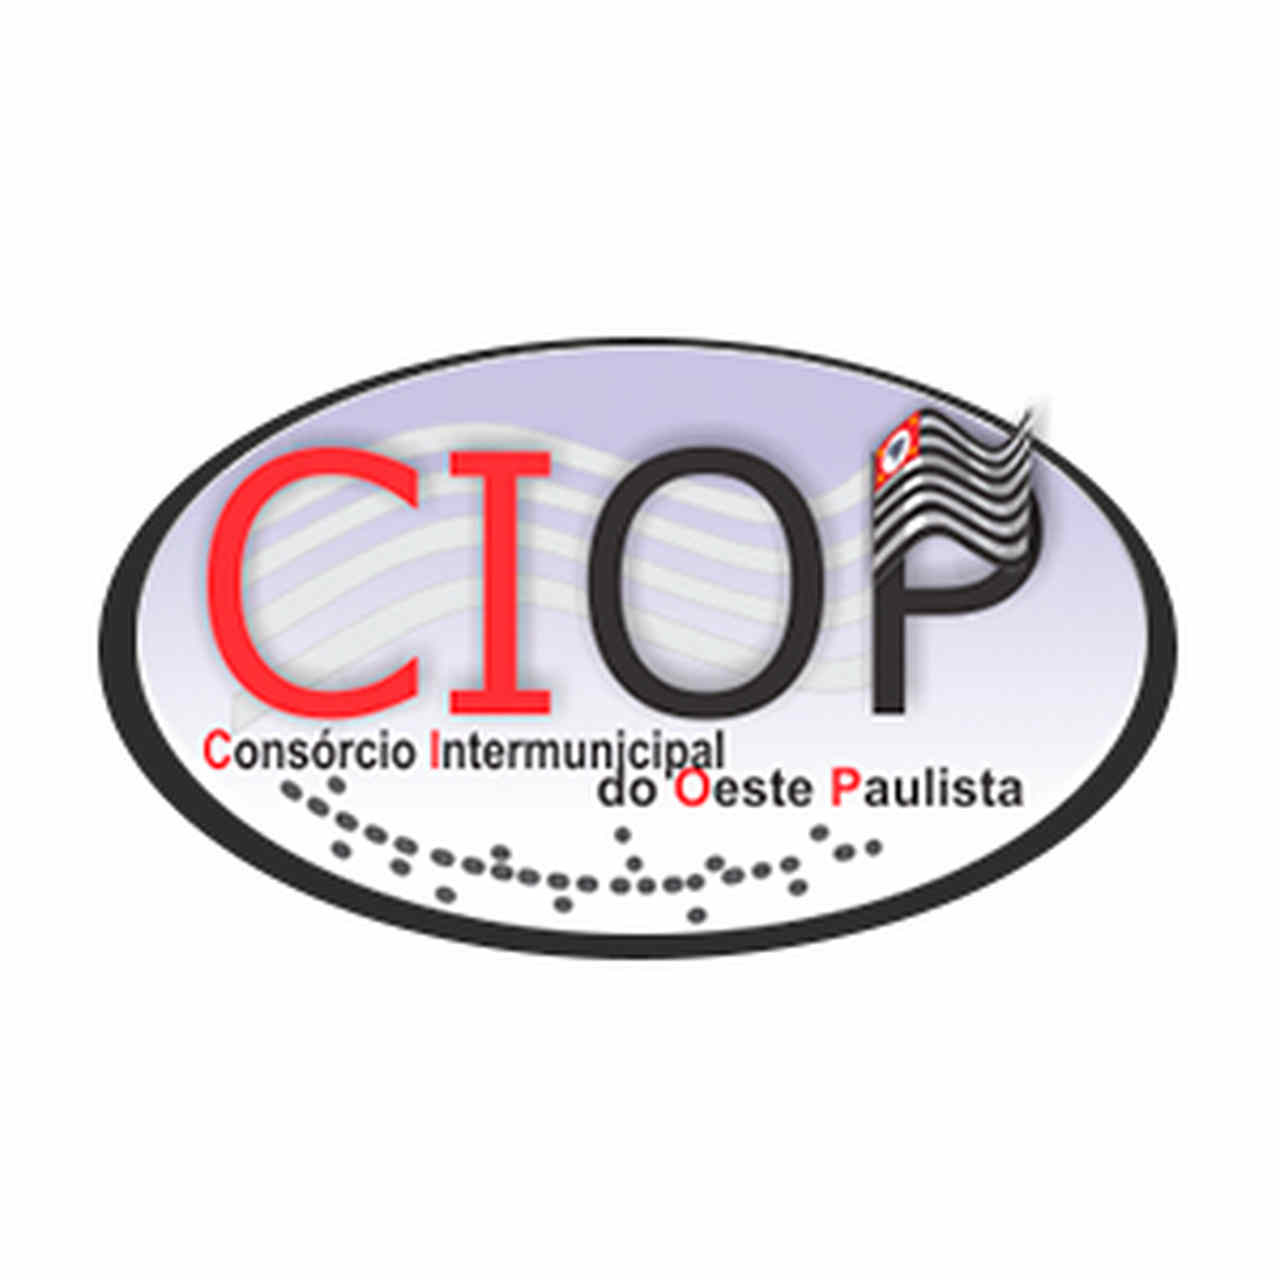 Consórcio Intermunicipal do Oeste Paulista - CIOP